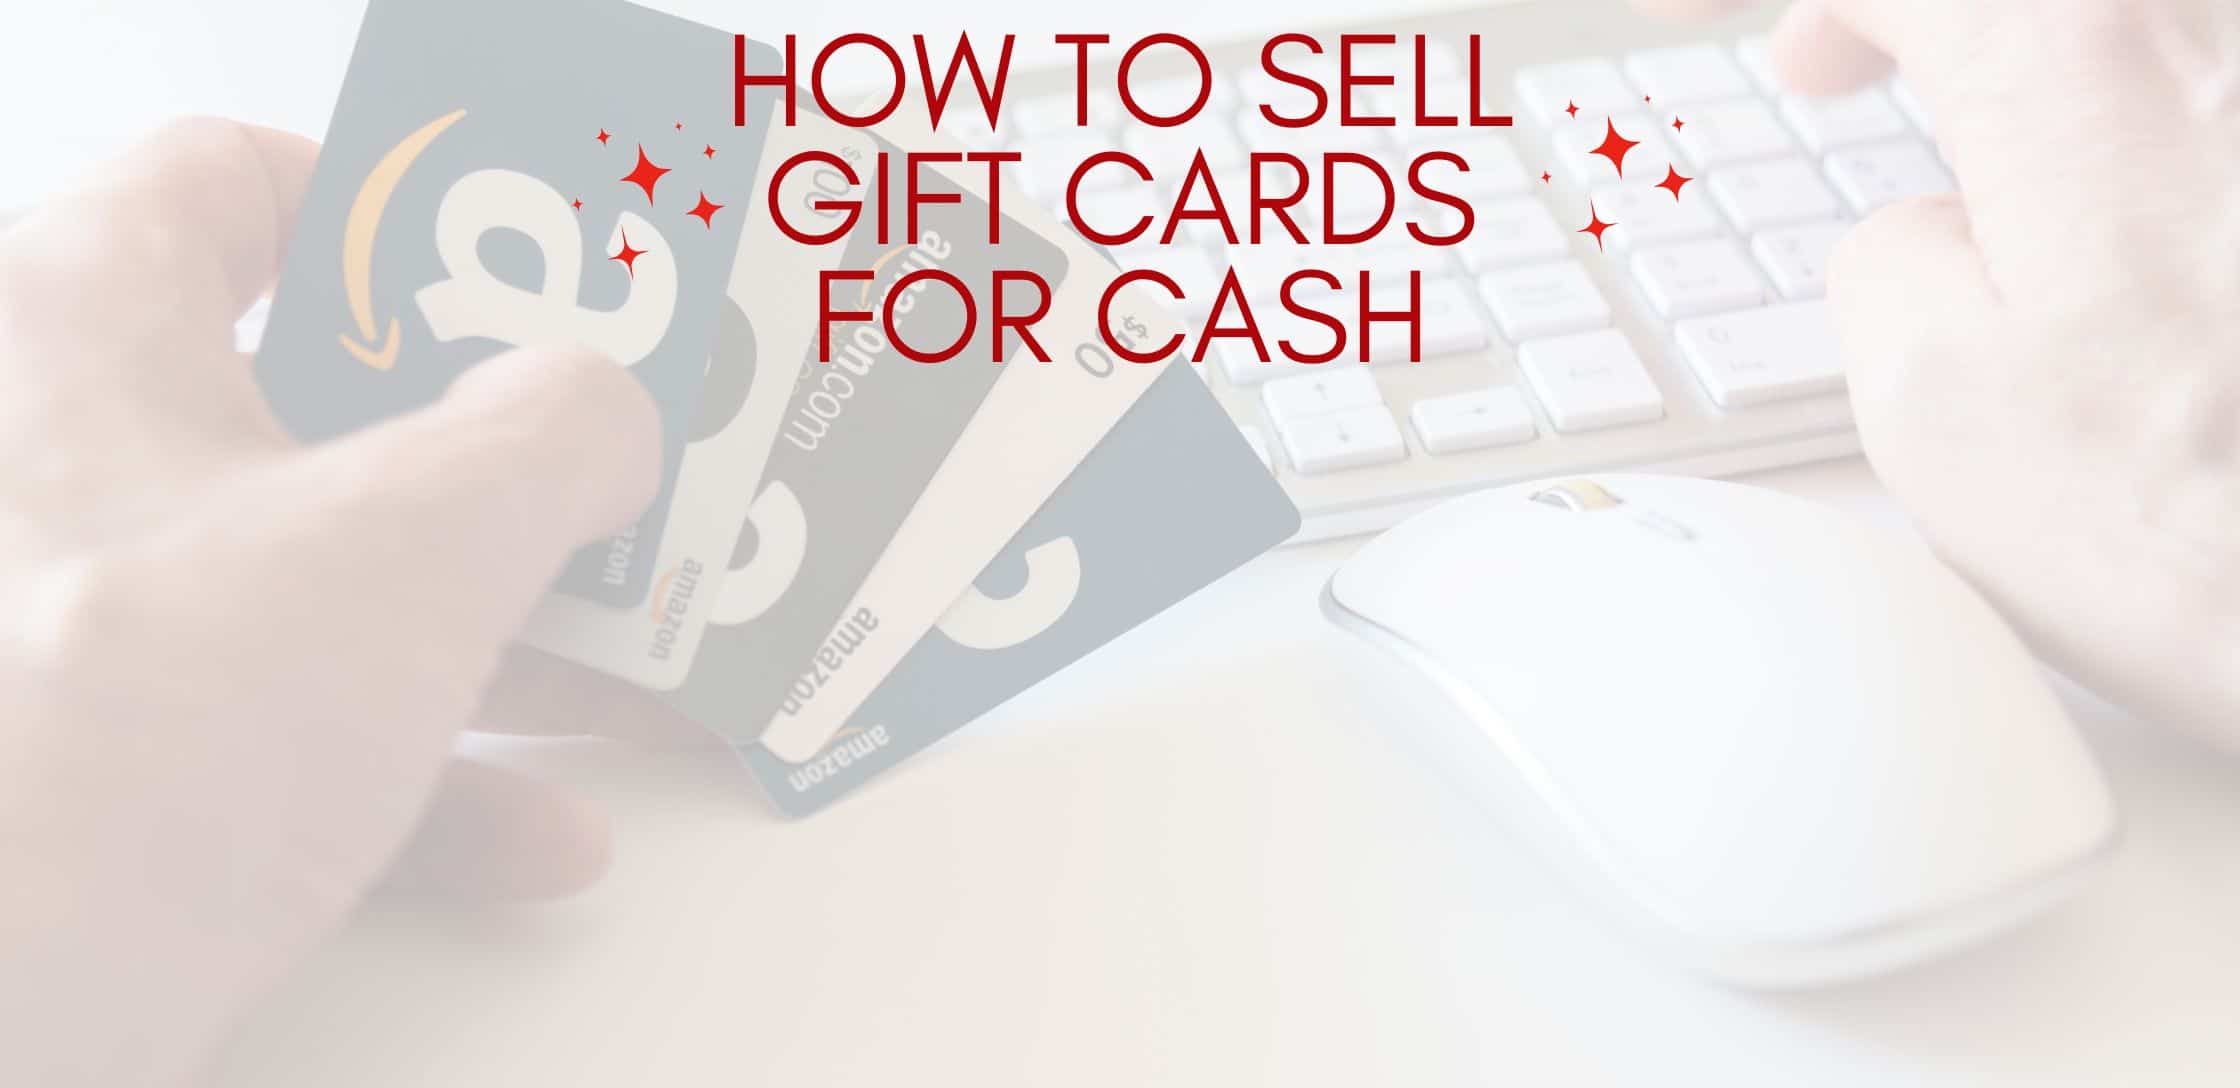 Win a $100.00 Amazon Gift Card!